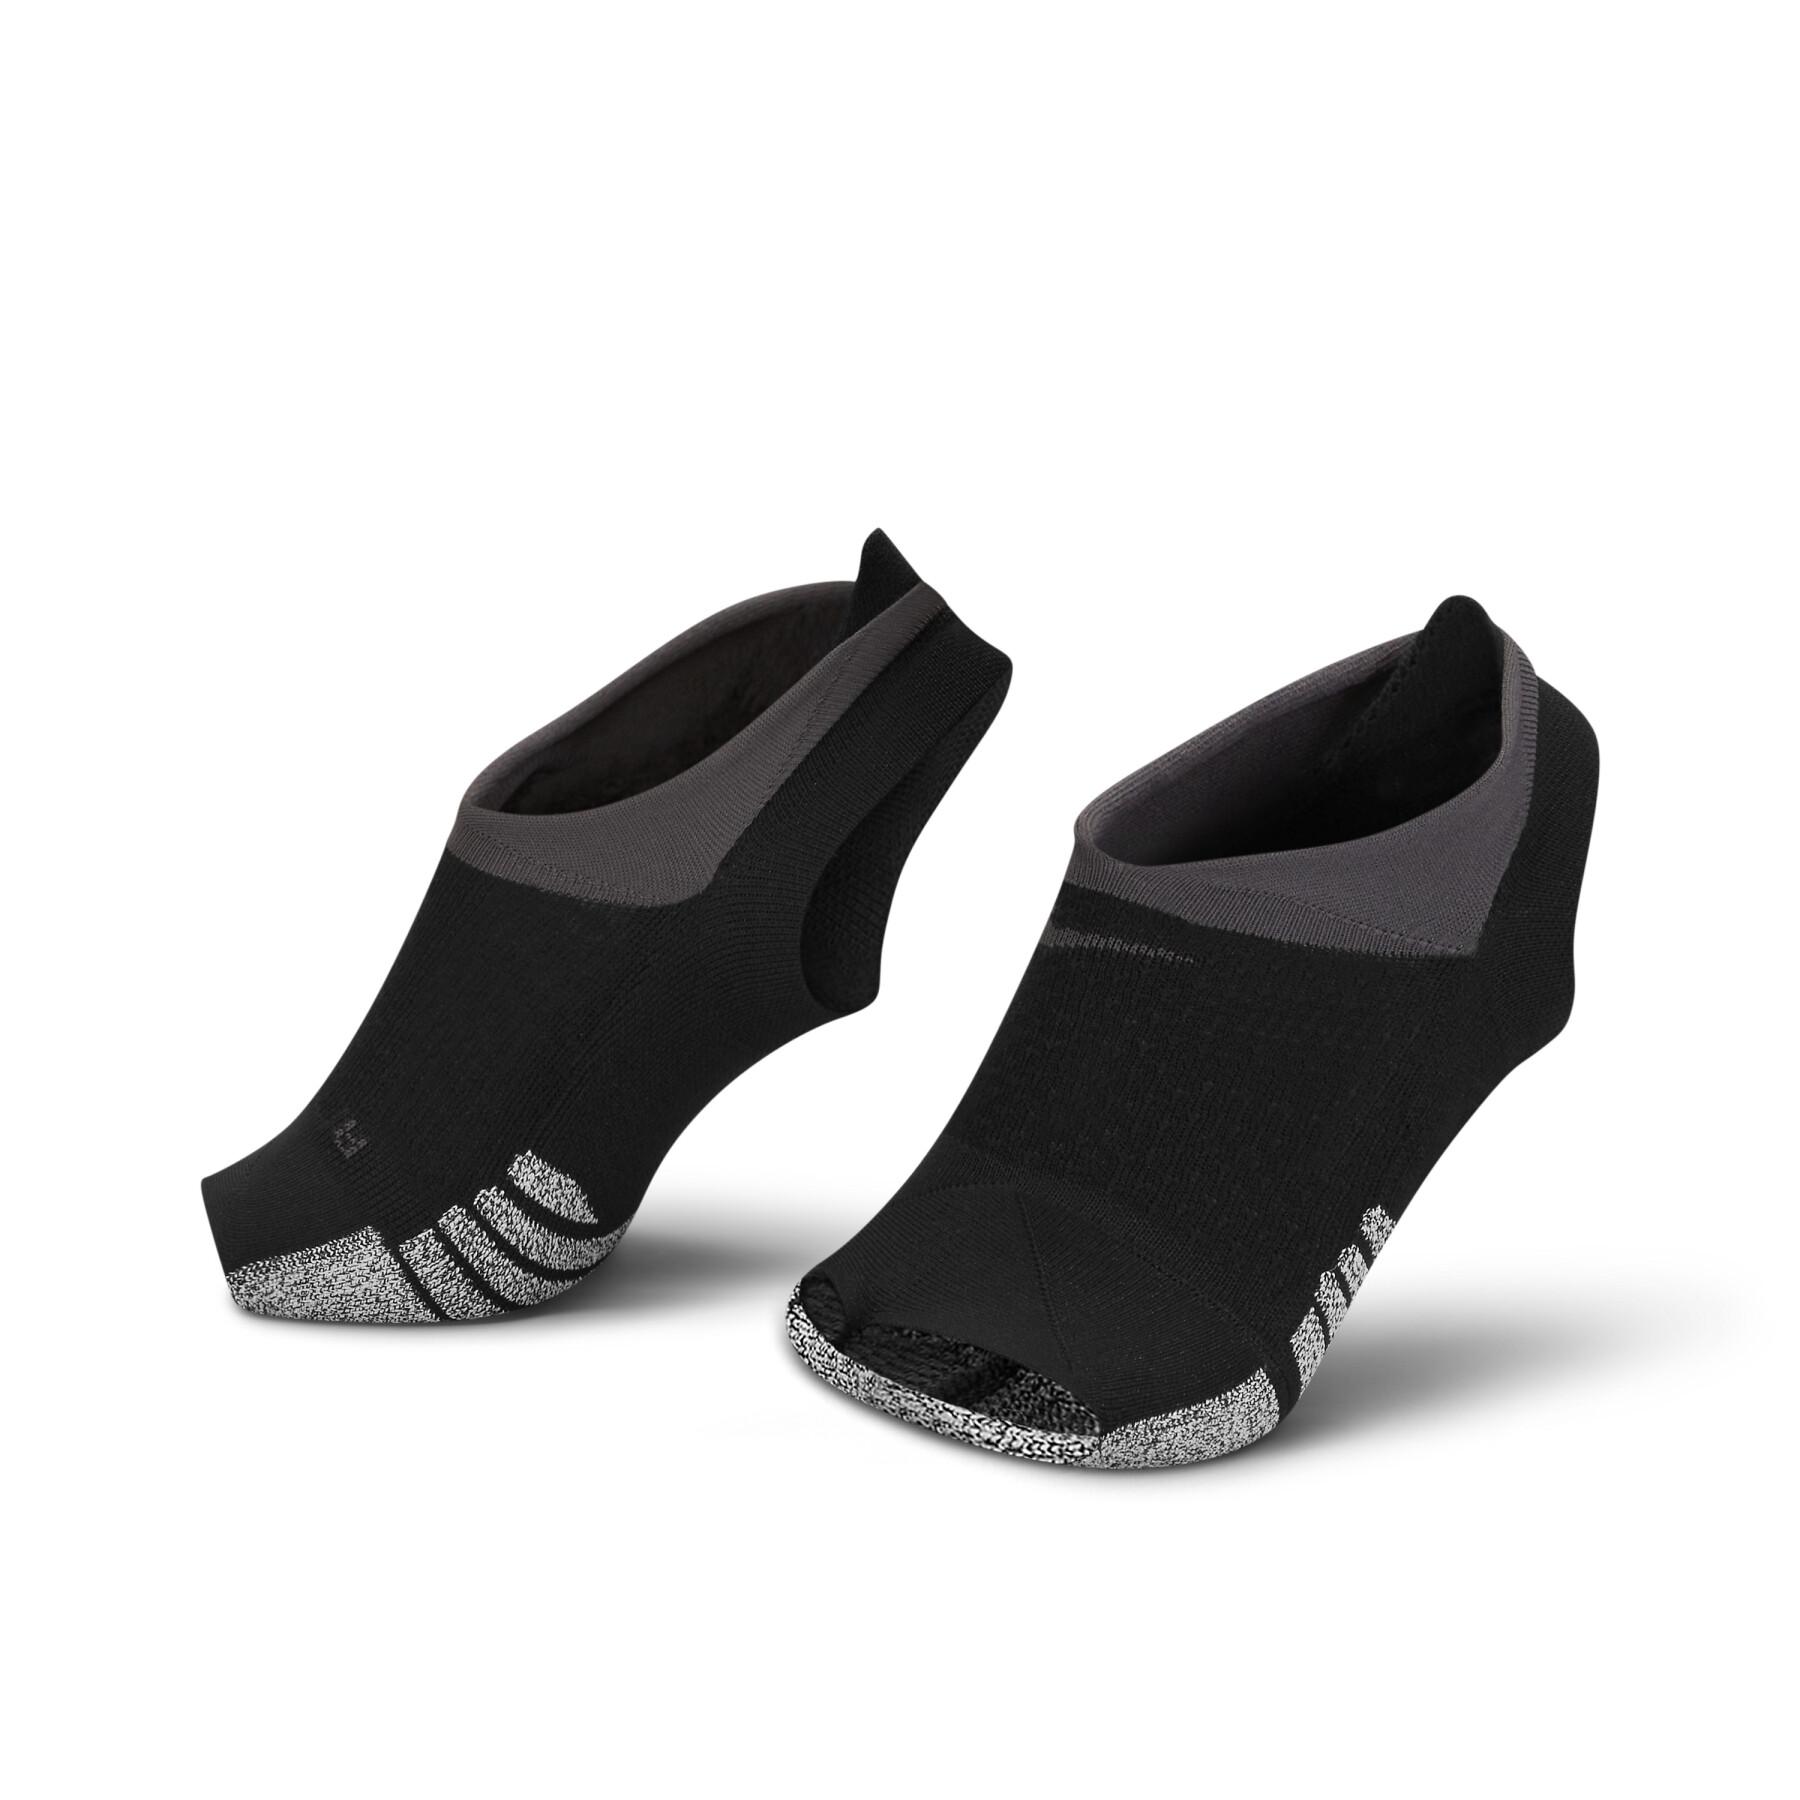 Chaussettes femme Nike Grip studio